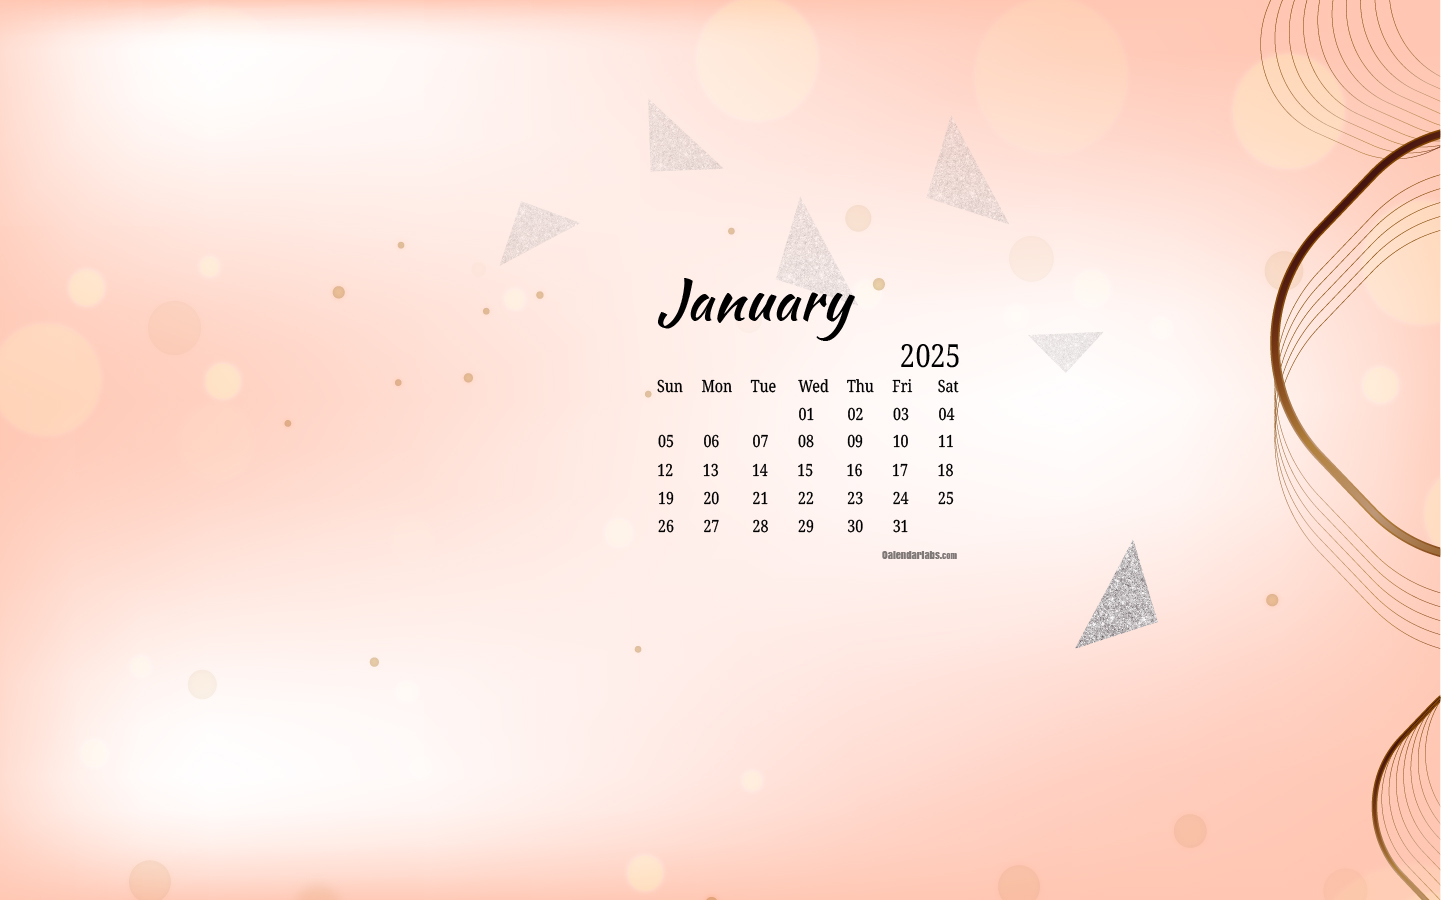 January 2025 Desktop Wallpaper Calendar - CalendarLabs